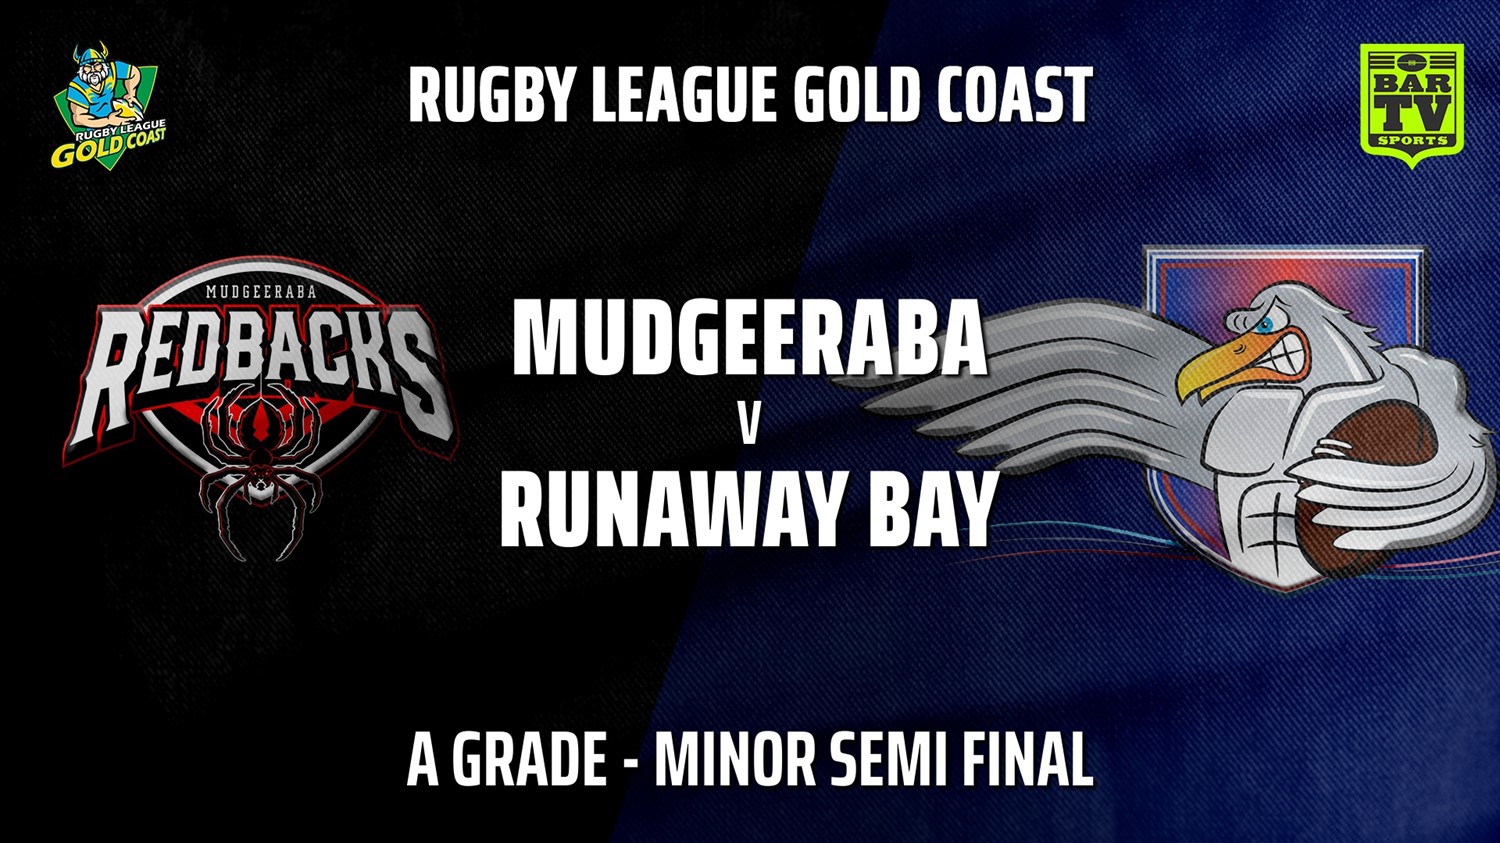 210925-Gold Coast Minor Semi Final - A Grade - Mudgeeraba Redbacks v Runaway Bay Minigame Slate Image